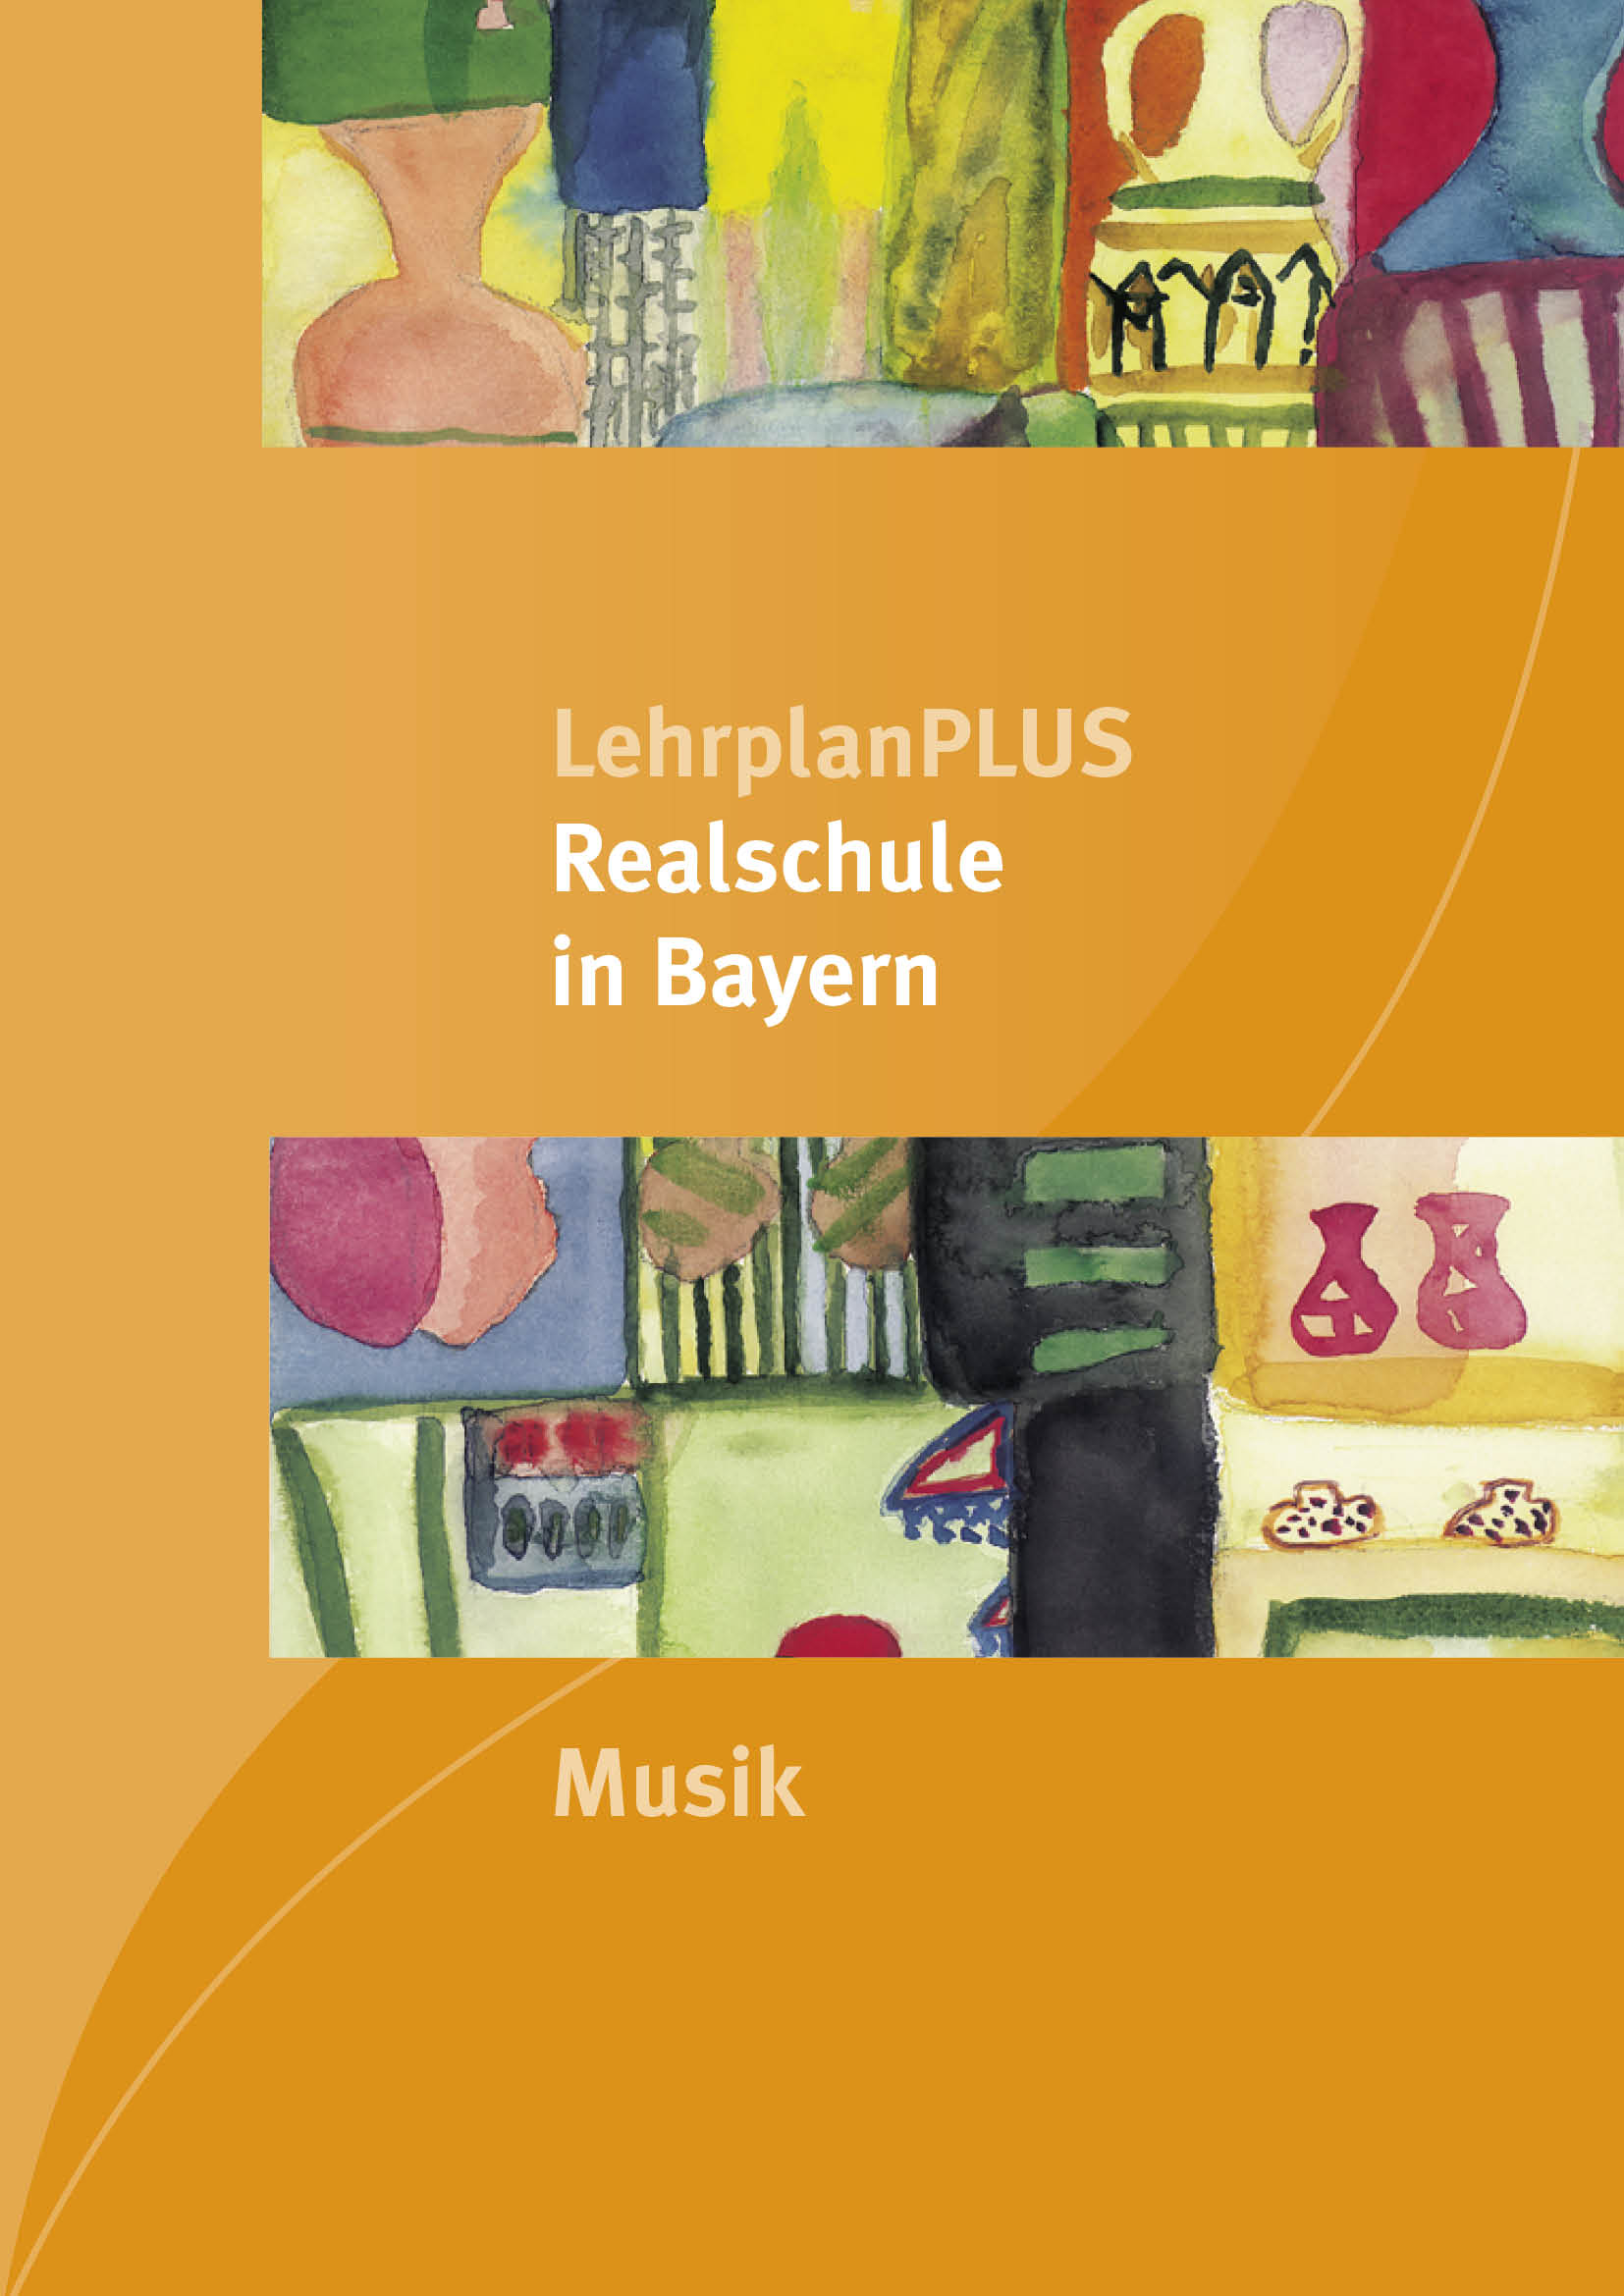 LehrplanPLUS Realschule in Bayern - Musik